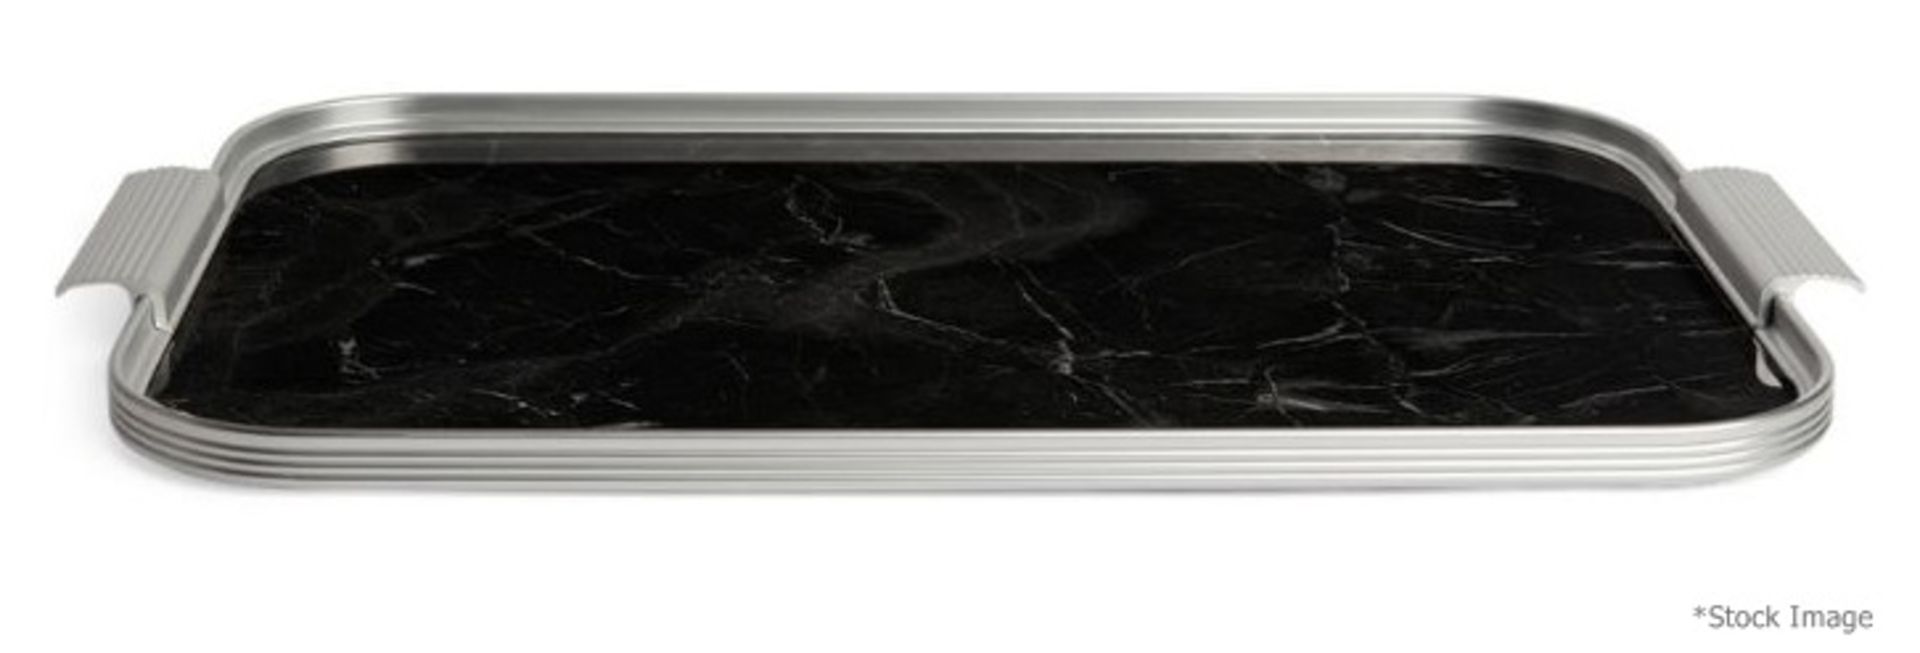 1 x KAYMET Silver Marble Serving Tray (40cm x 30cm) - Original Price £133.00 - Ex-Display - Ref: